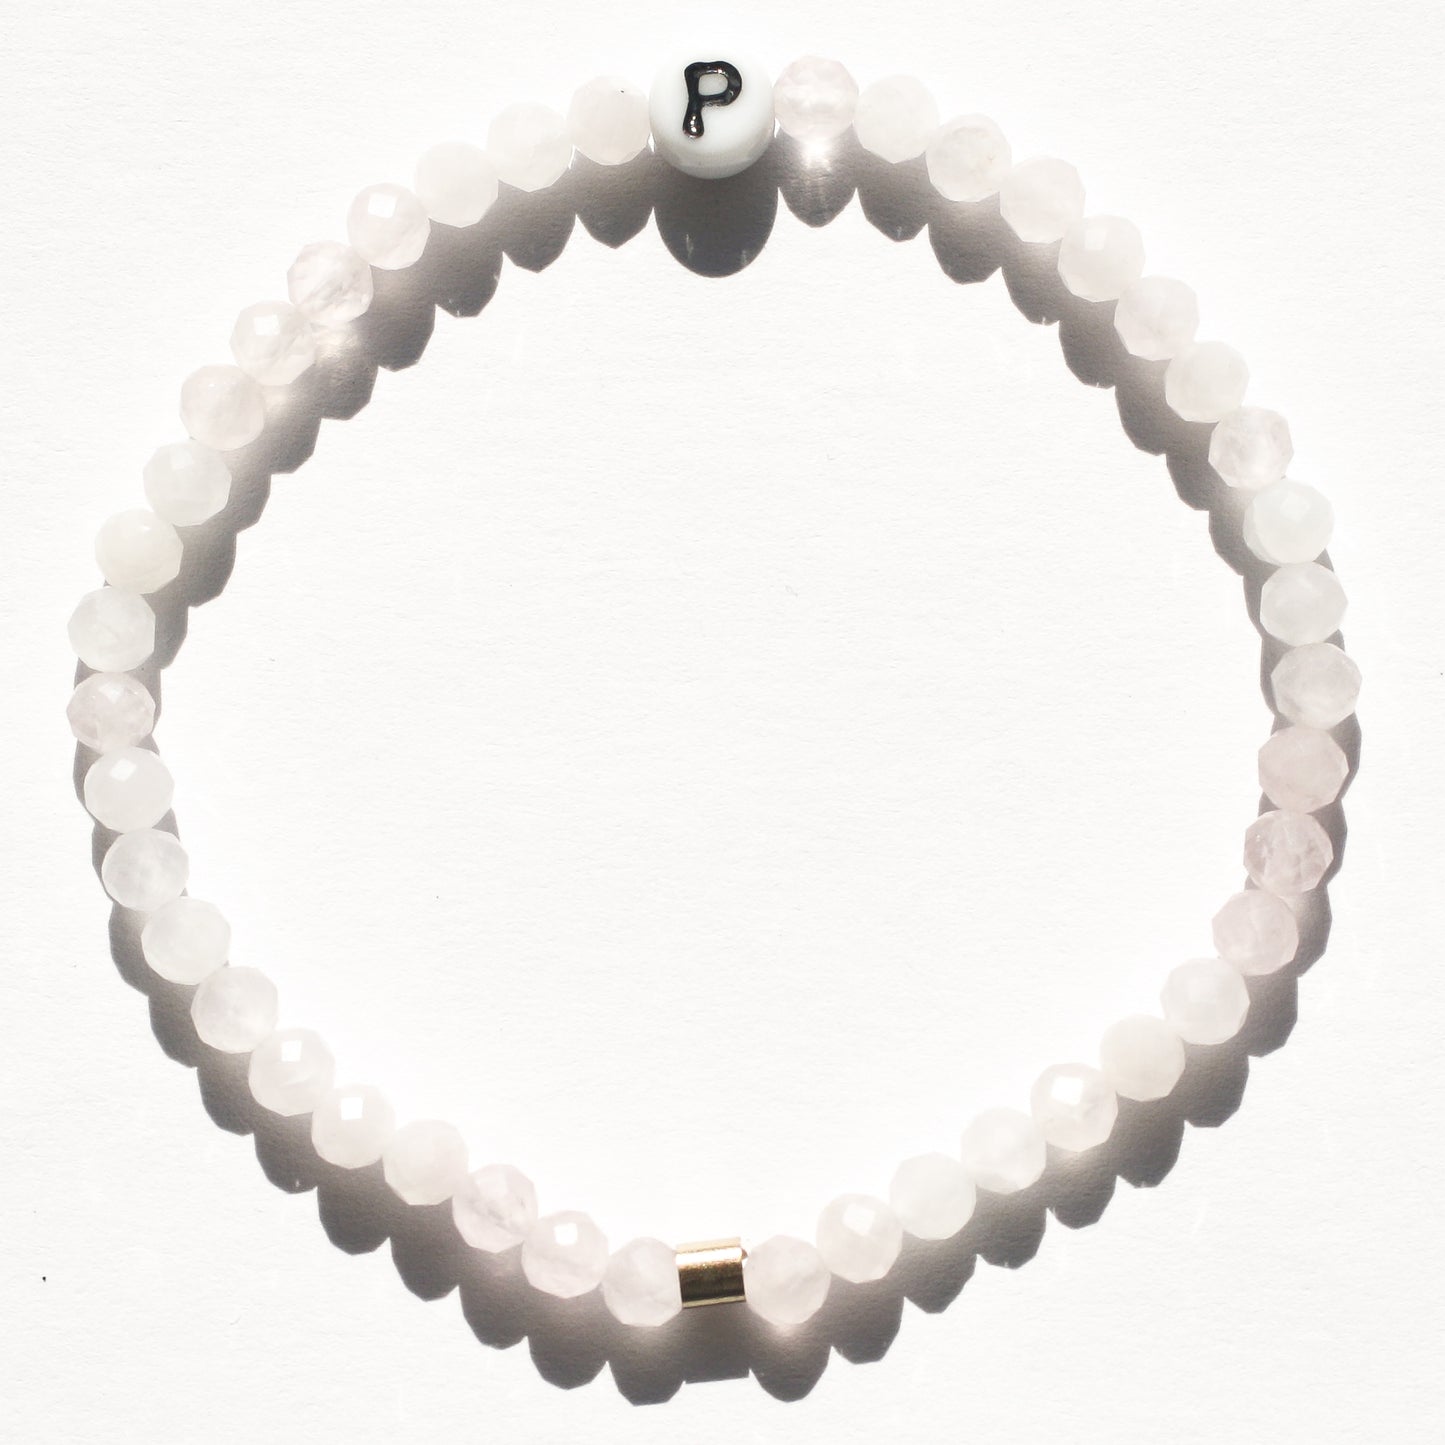 Bespoke P initial bracelet in rose quartz